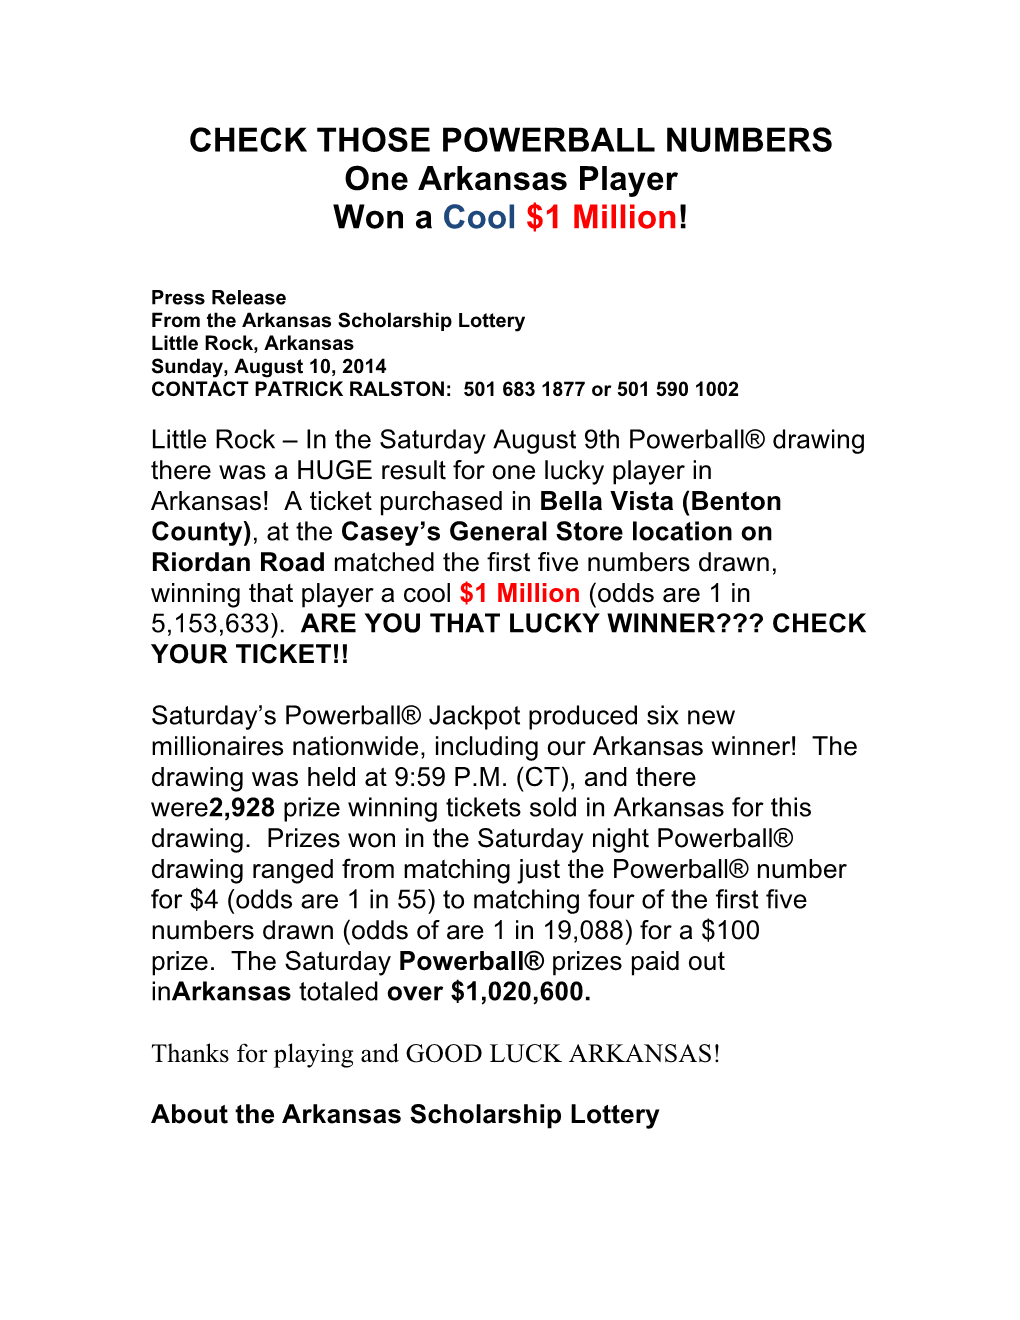 One Arkansas Player Won a Cool $1 Million!